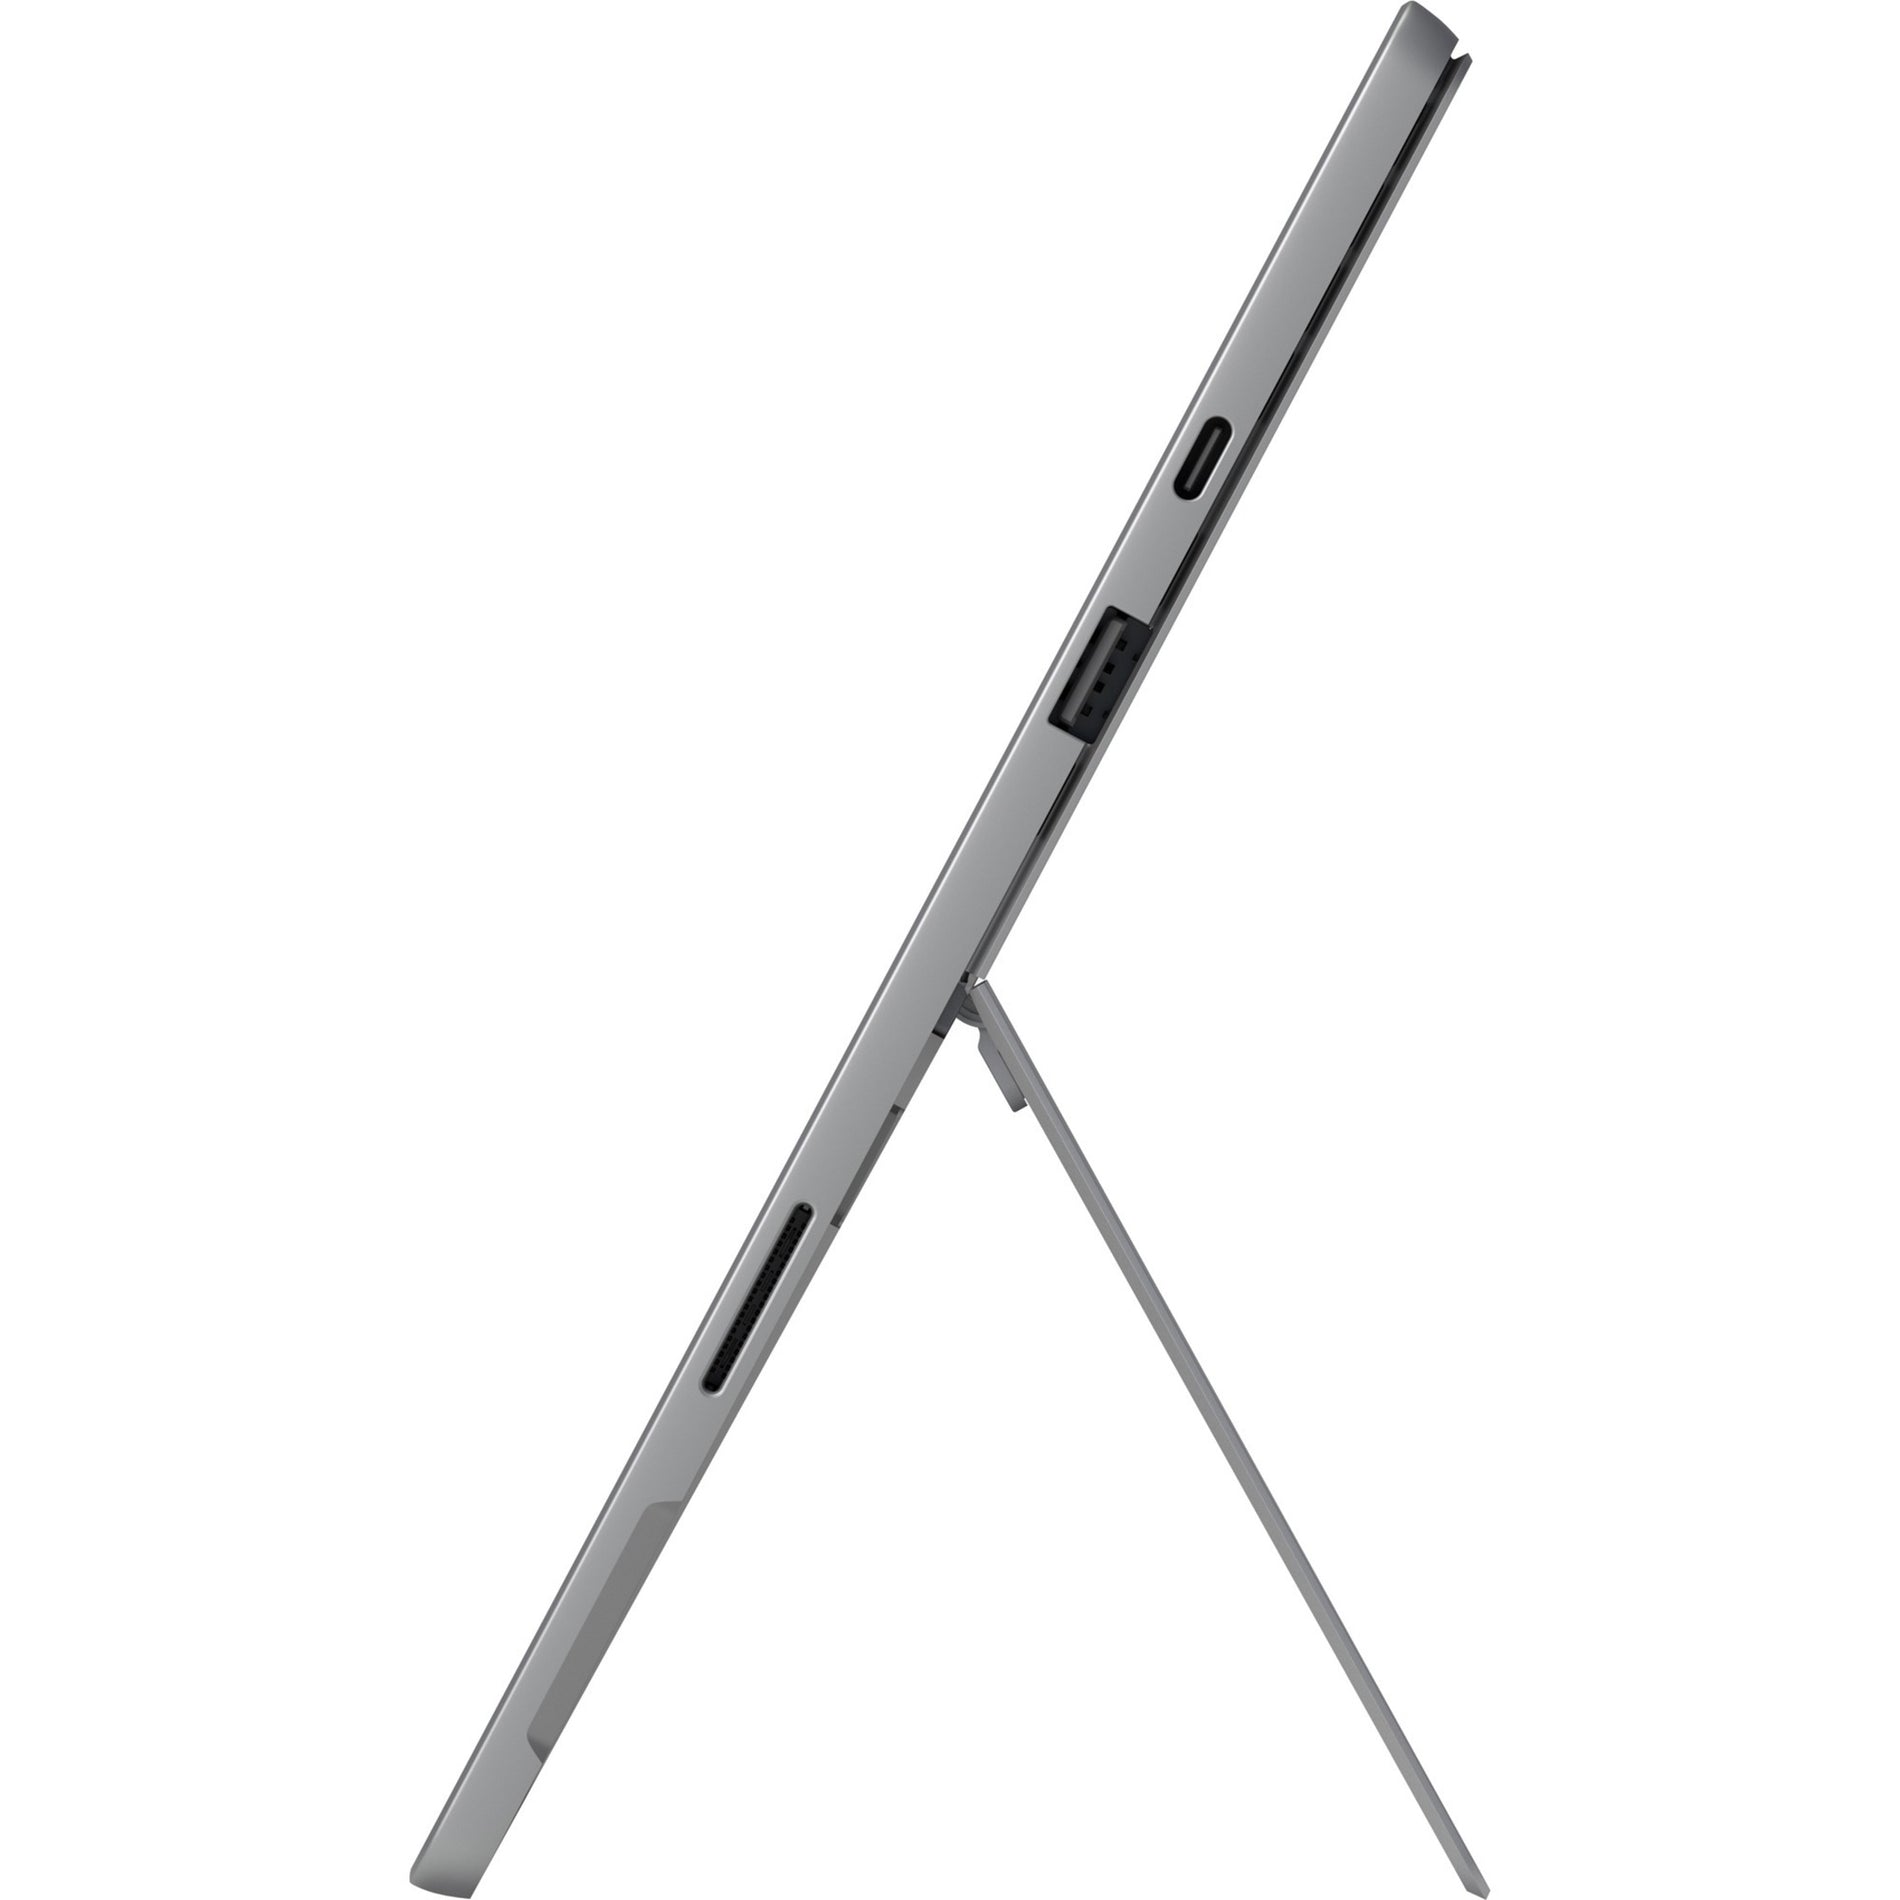 Microsoft 1Y5-00001 Surface Pro 7+ Tablet, 12.3" PixelSense Display, Core i5, 16GB RAM, 256GB SSD, Windows 10 Pro